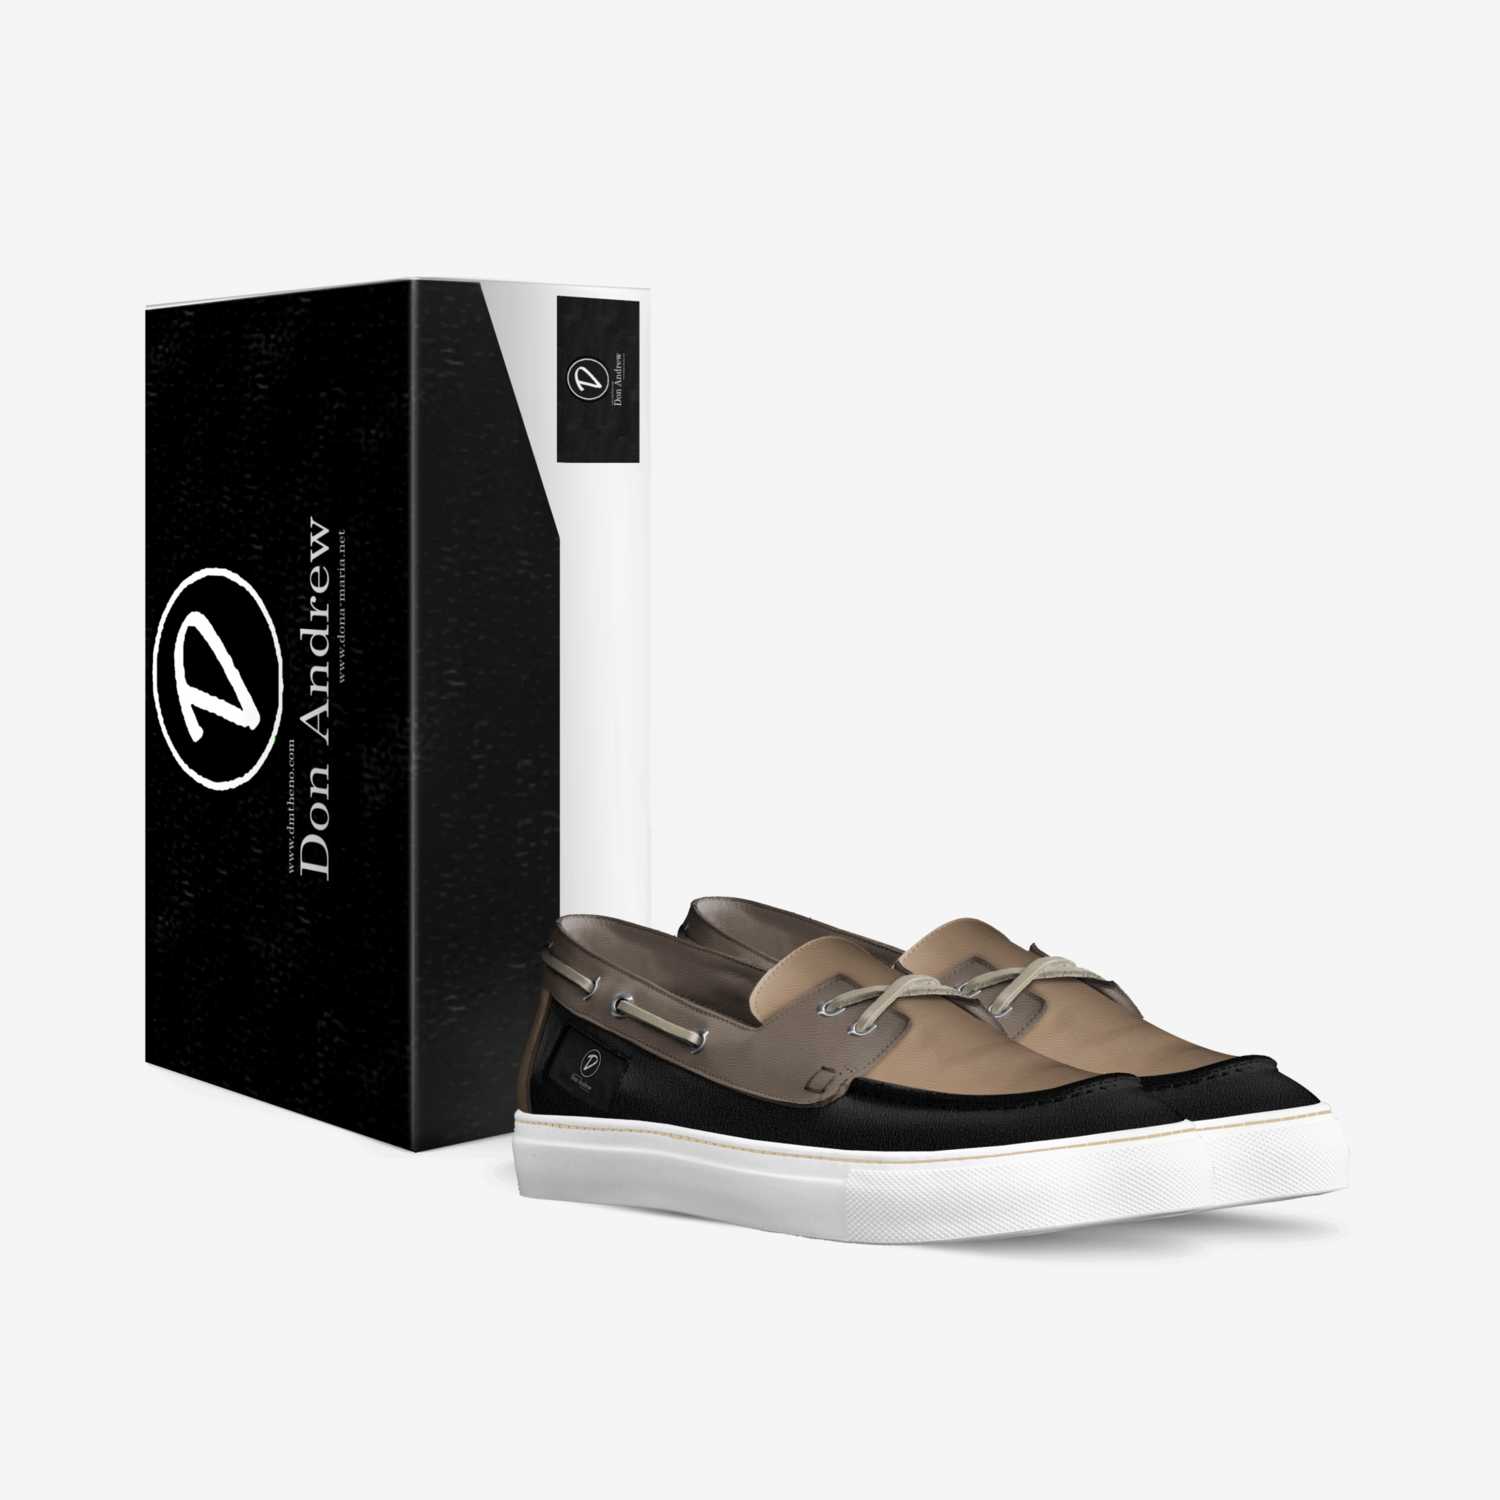 Dona Maria custom made in Italy shoes by Dona Maria | Box view